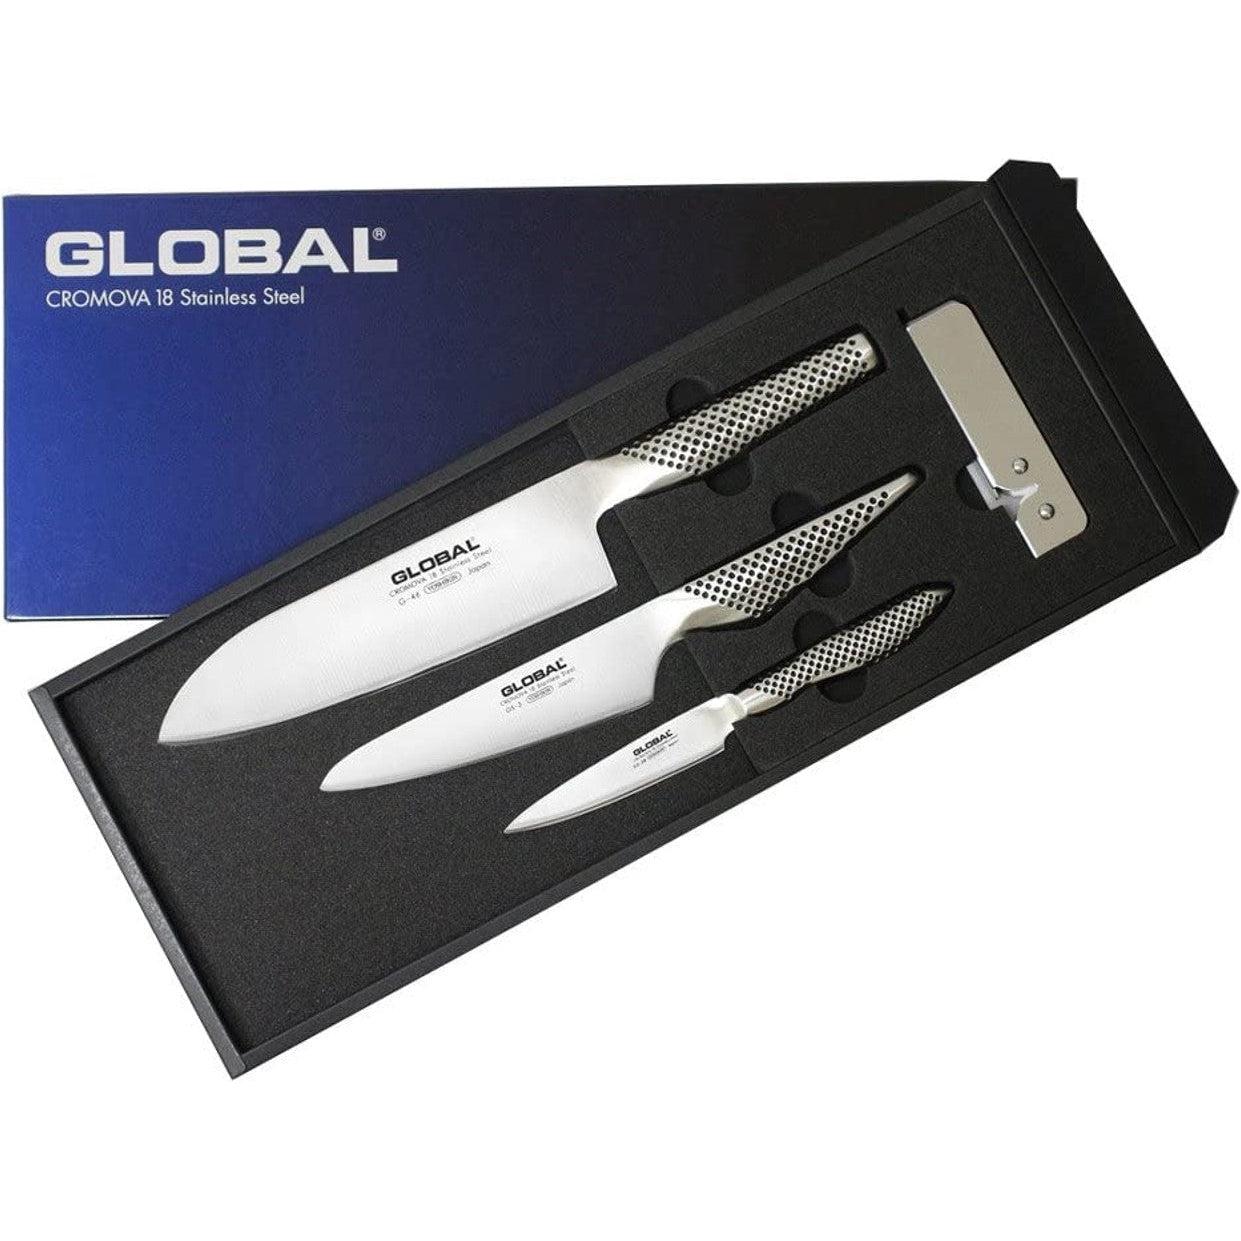 Global Knives